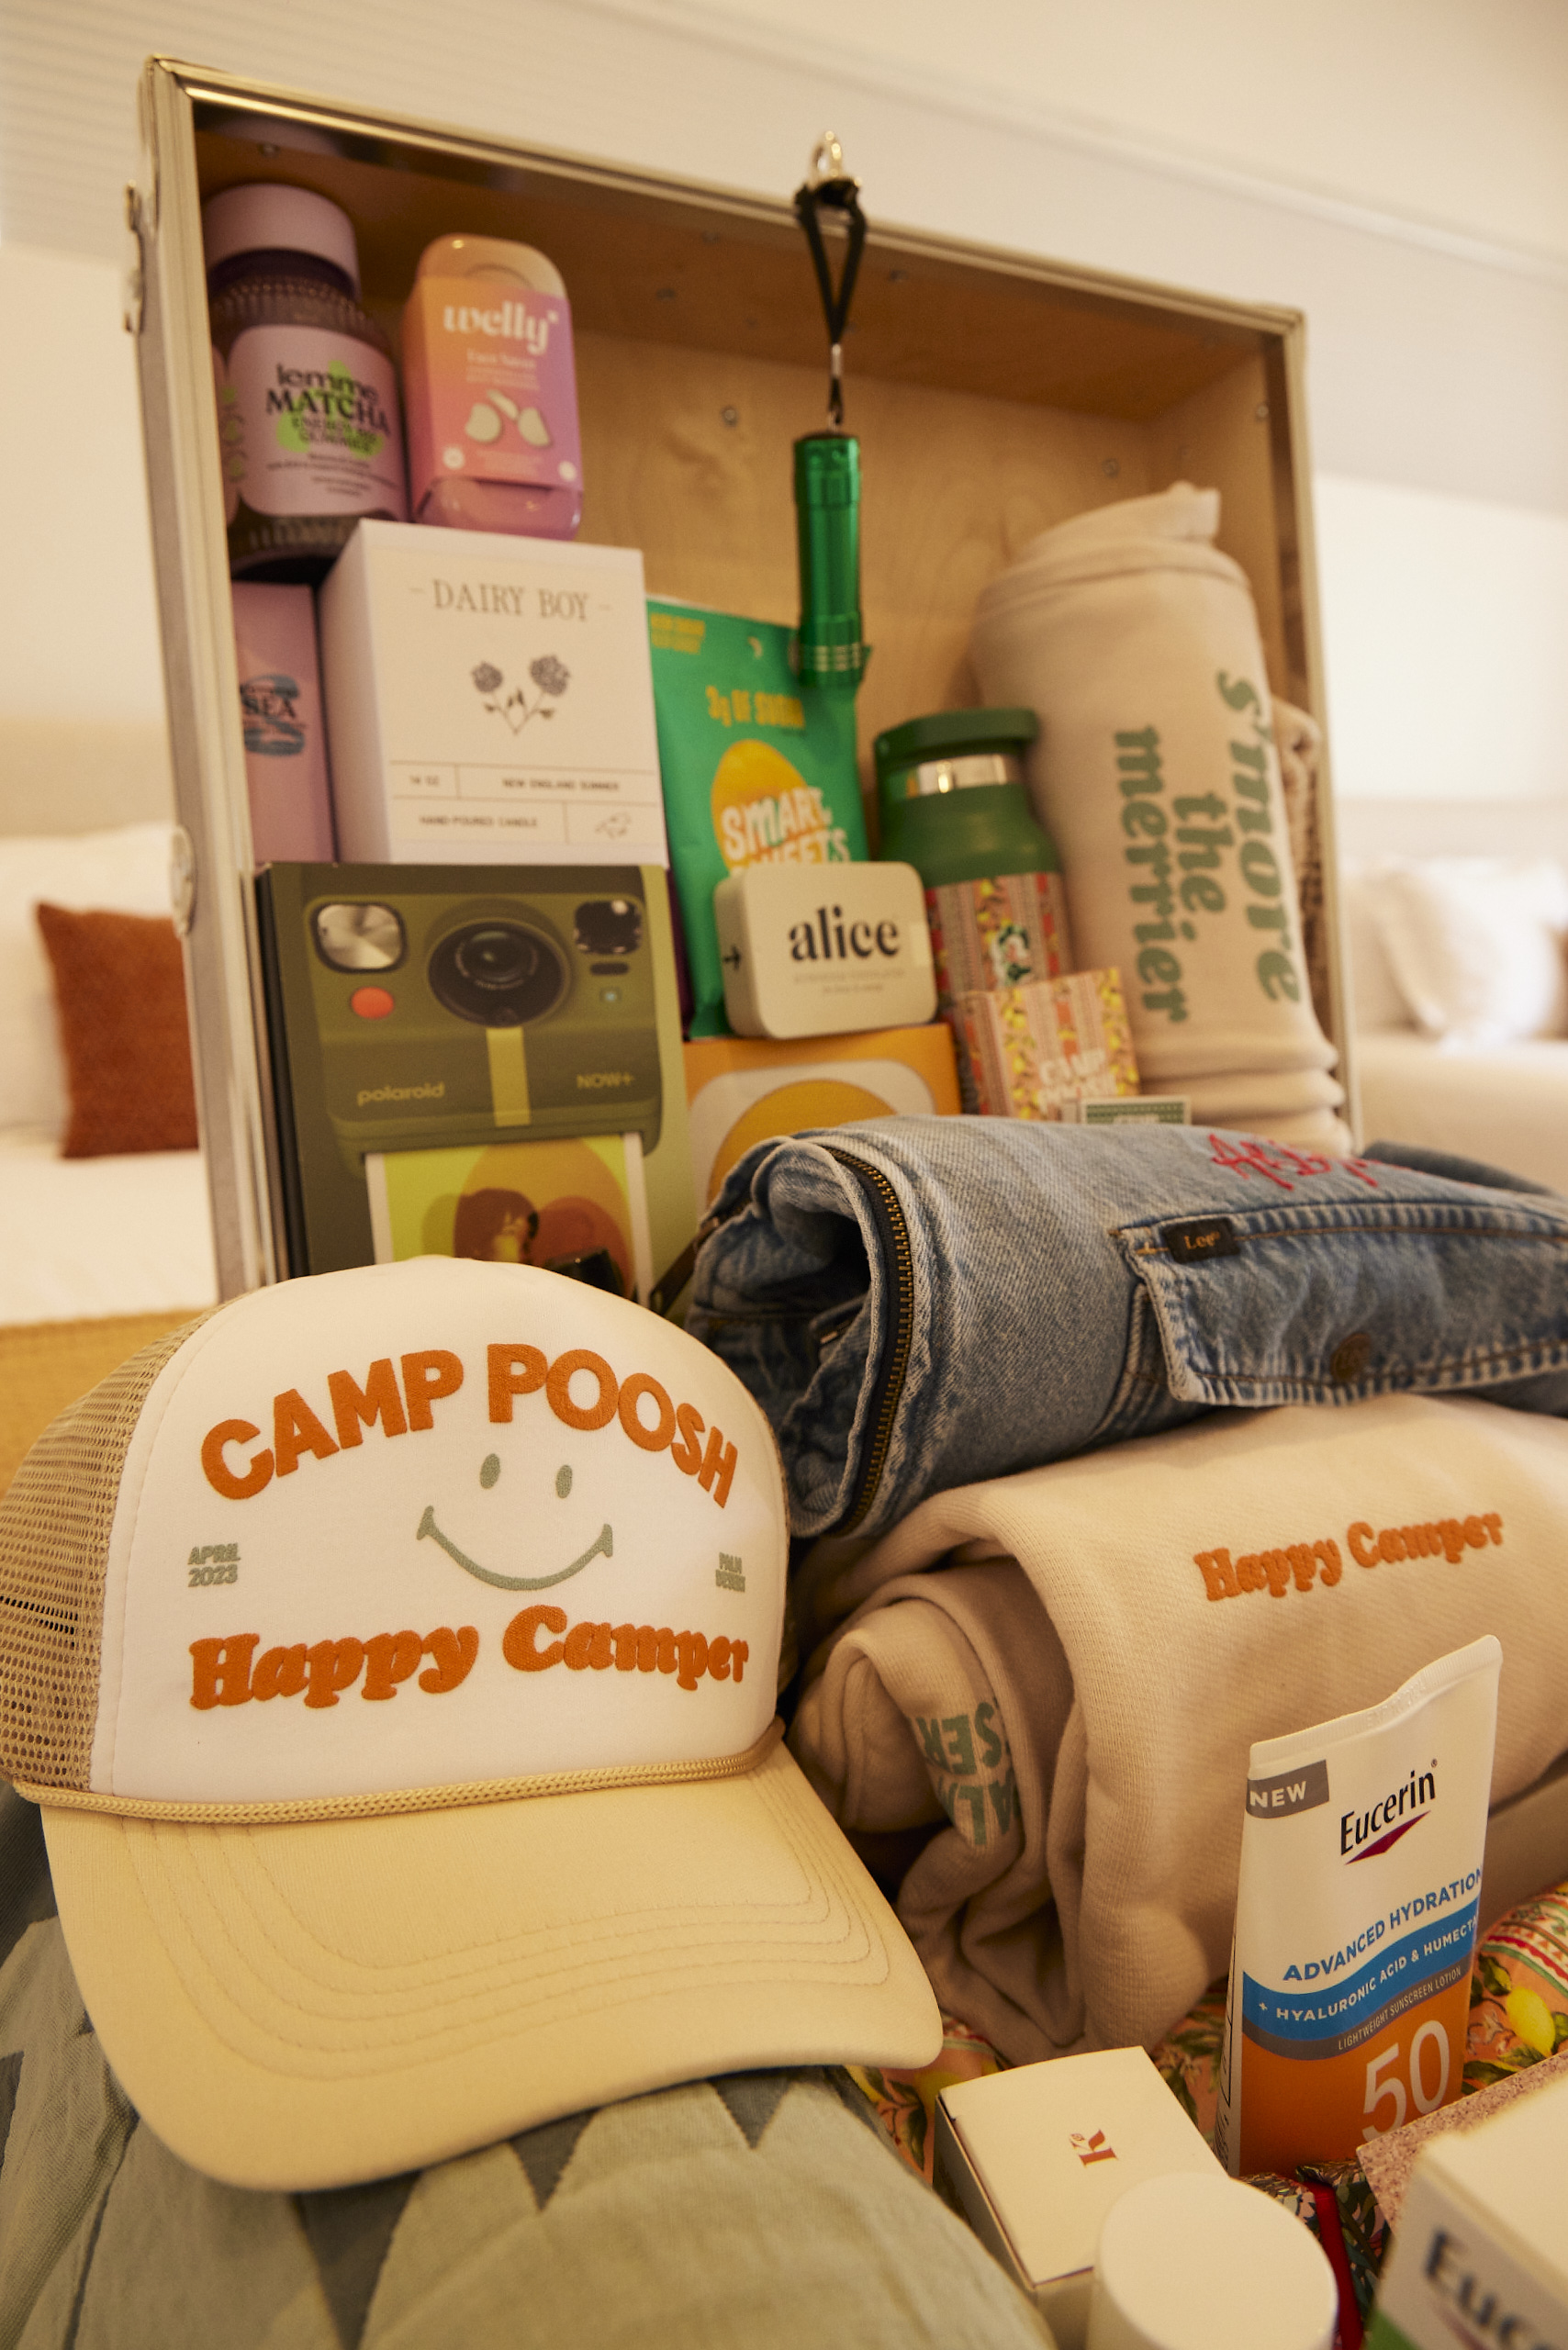 Camp Poosh camper giting box upclose